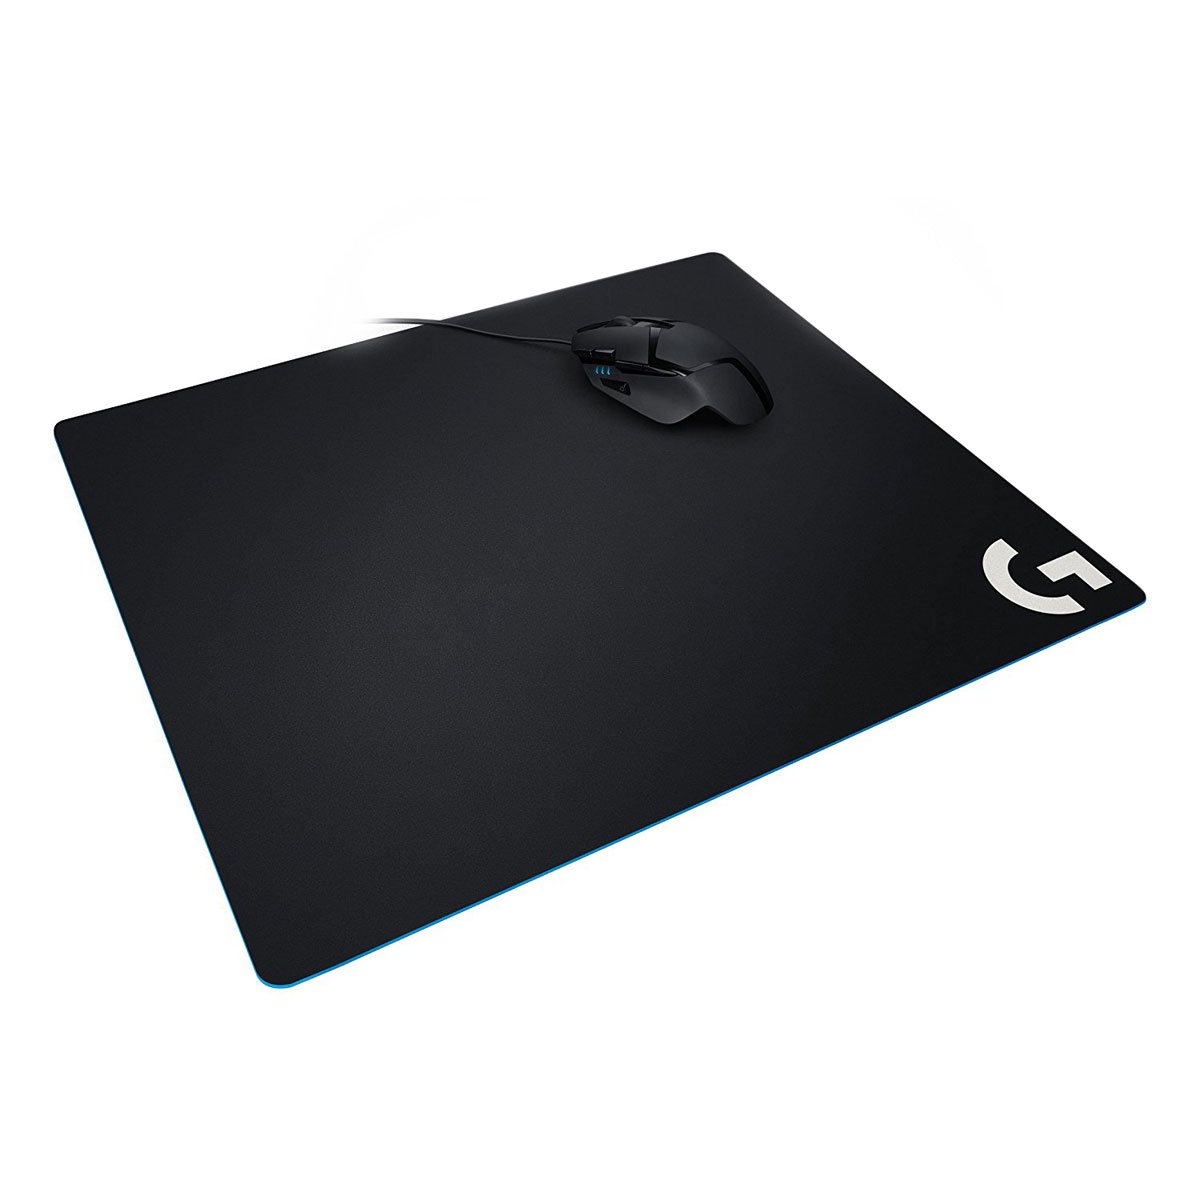 Koop Logitech G640 Cloth Gaming Mouse Pad